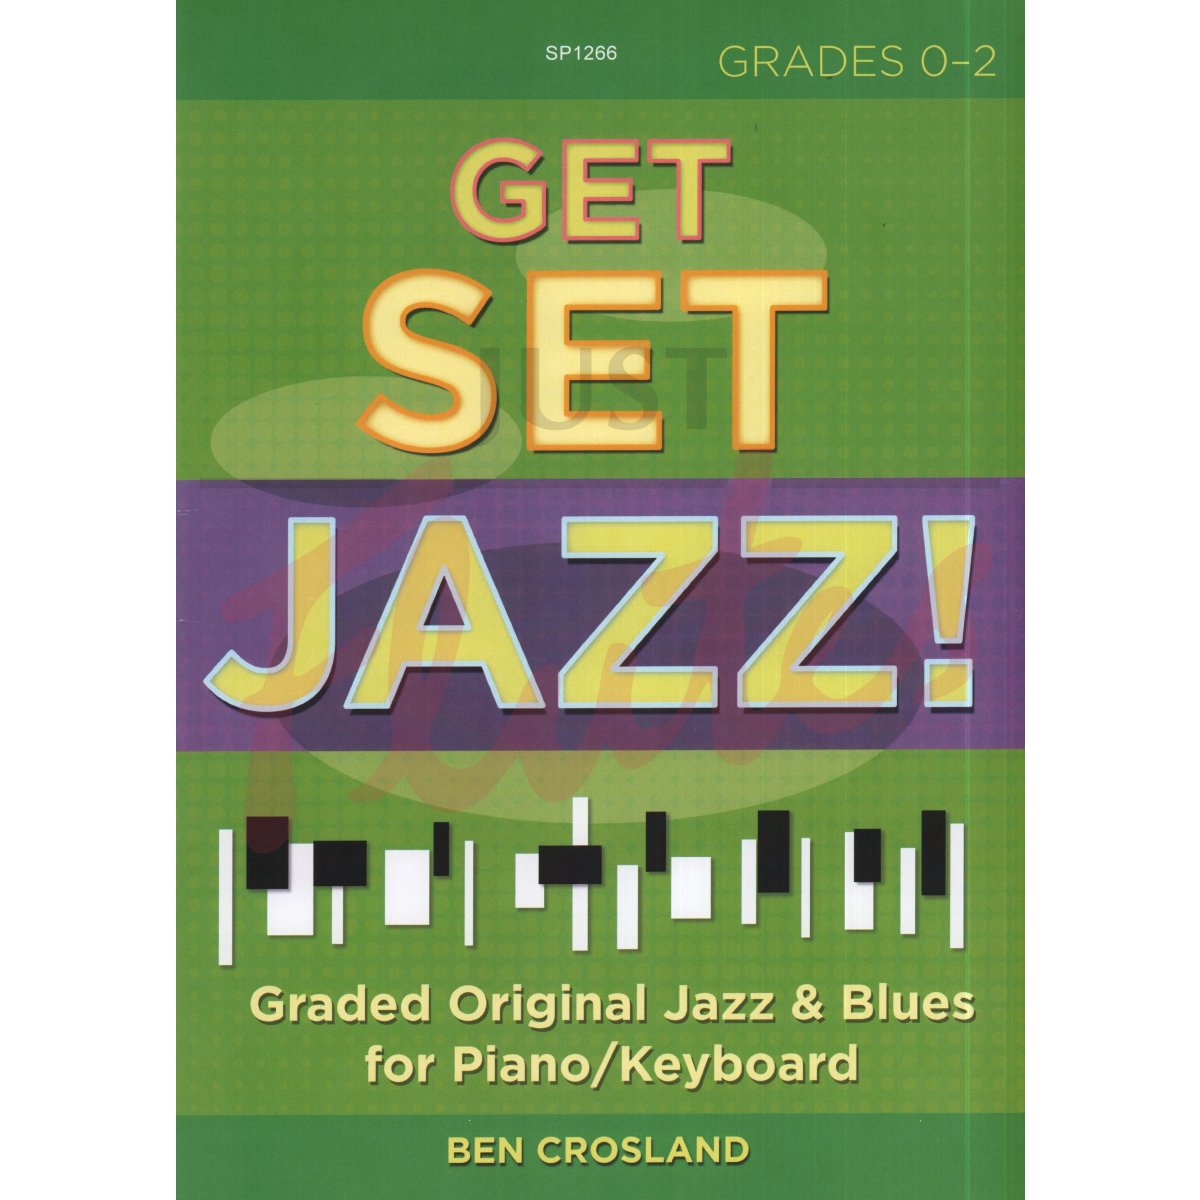 Get Set Jazz! Graded Original Jazz &amp; Blues for Piano/Keyboard, Grades 0-2